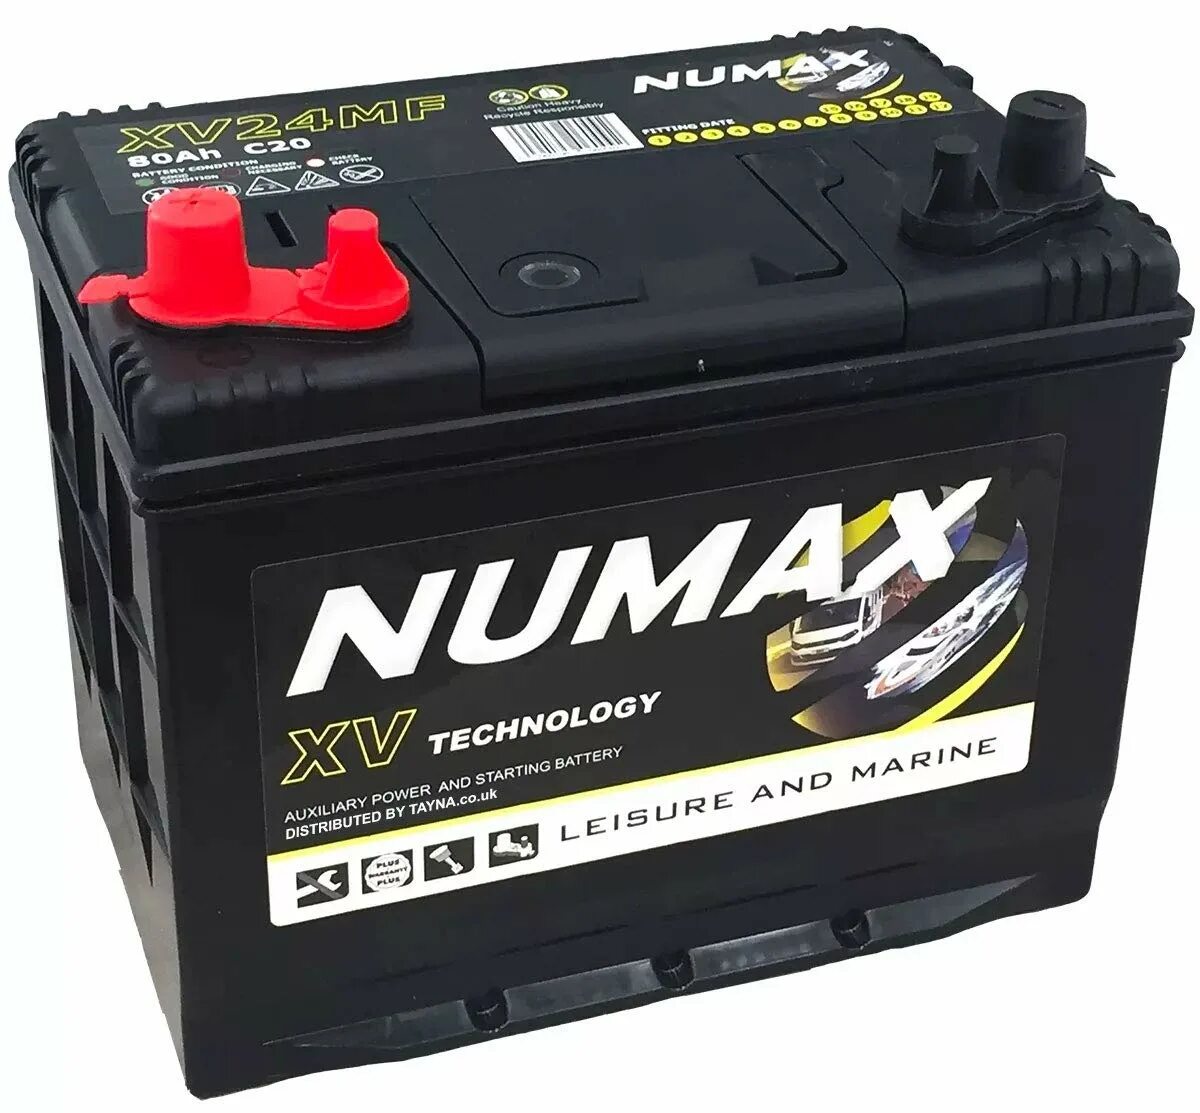 24 battery. Numax dc24. Numax 75в24l 12v. Numax dc244a. 12v 800ah Battery.